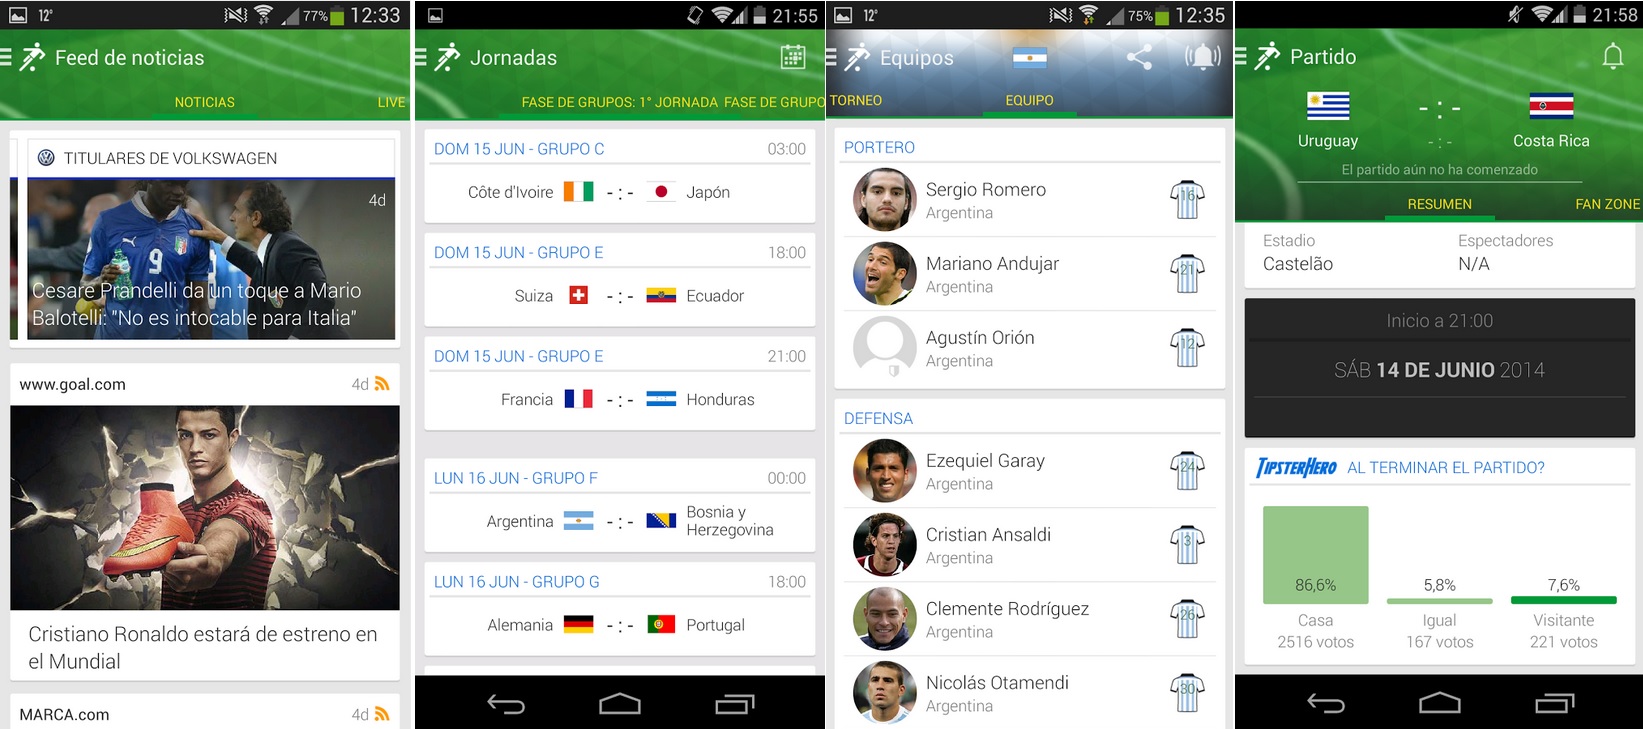 Viva el Mundial de Fútbol minuto a minuto, gratis para iPad, iPod, iPhone, Android, Windows Phone